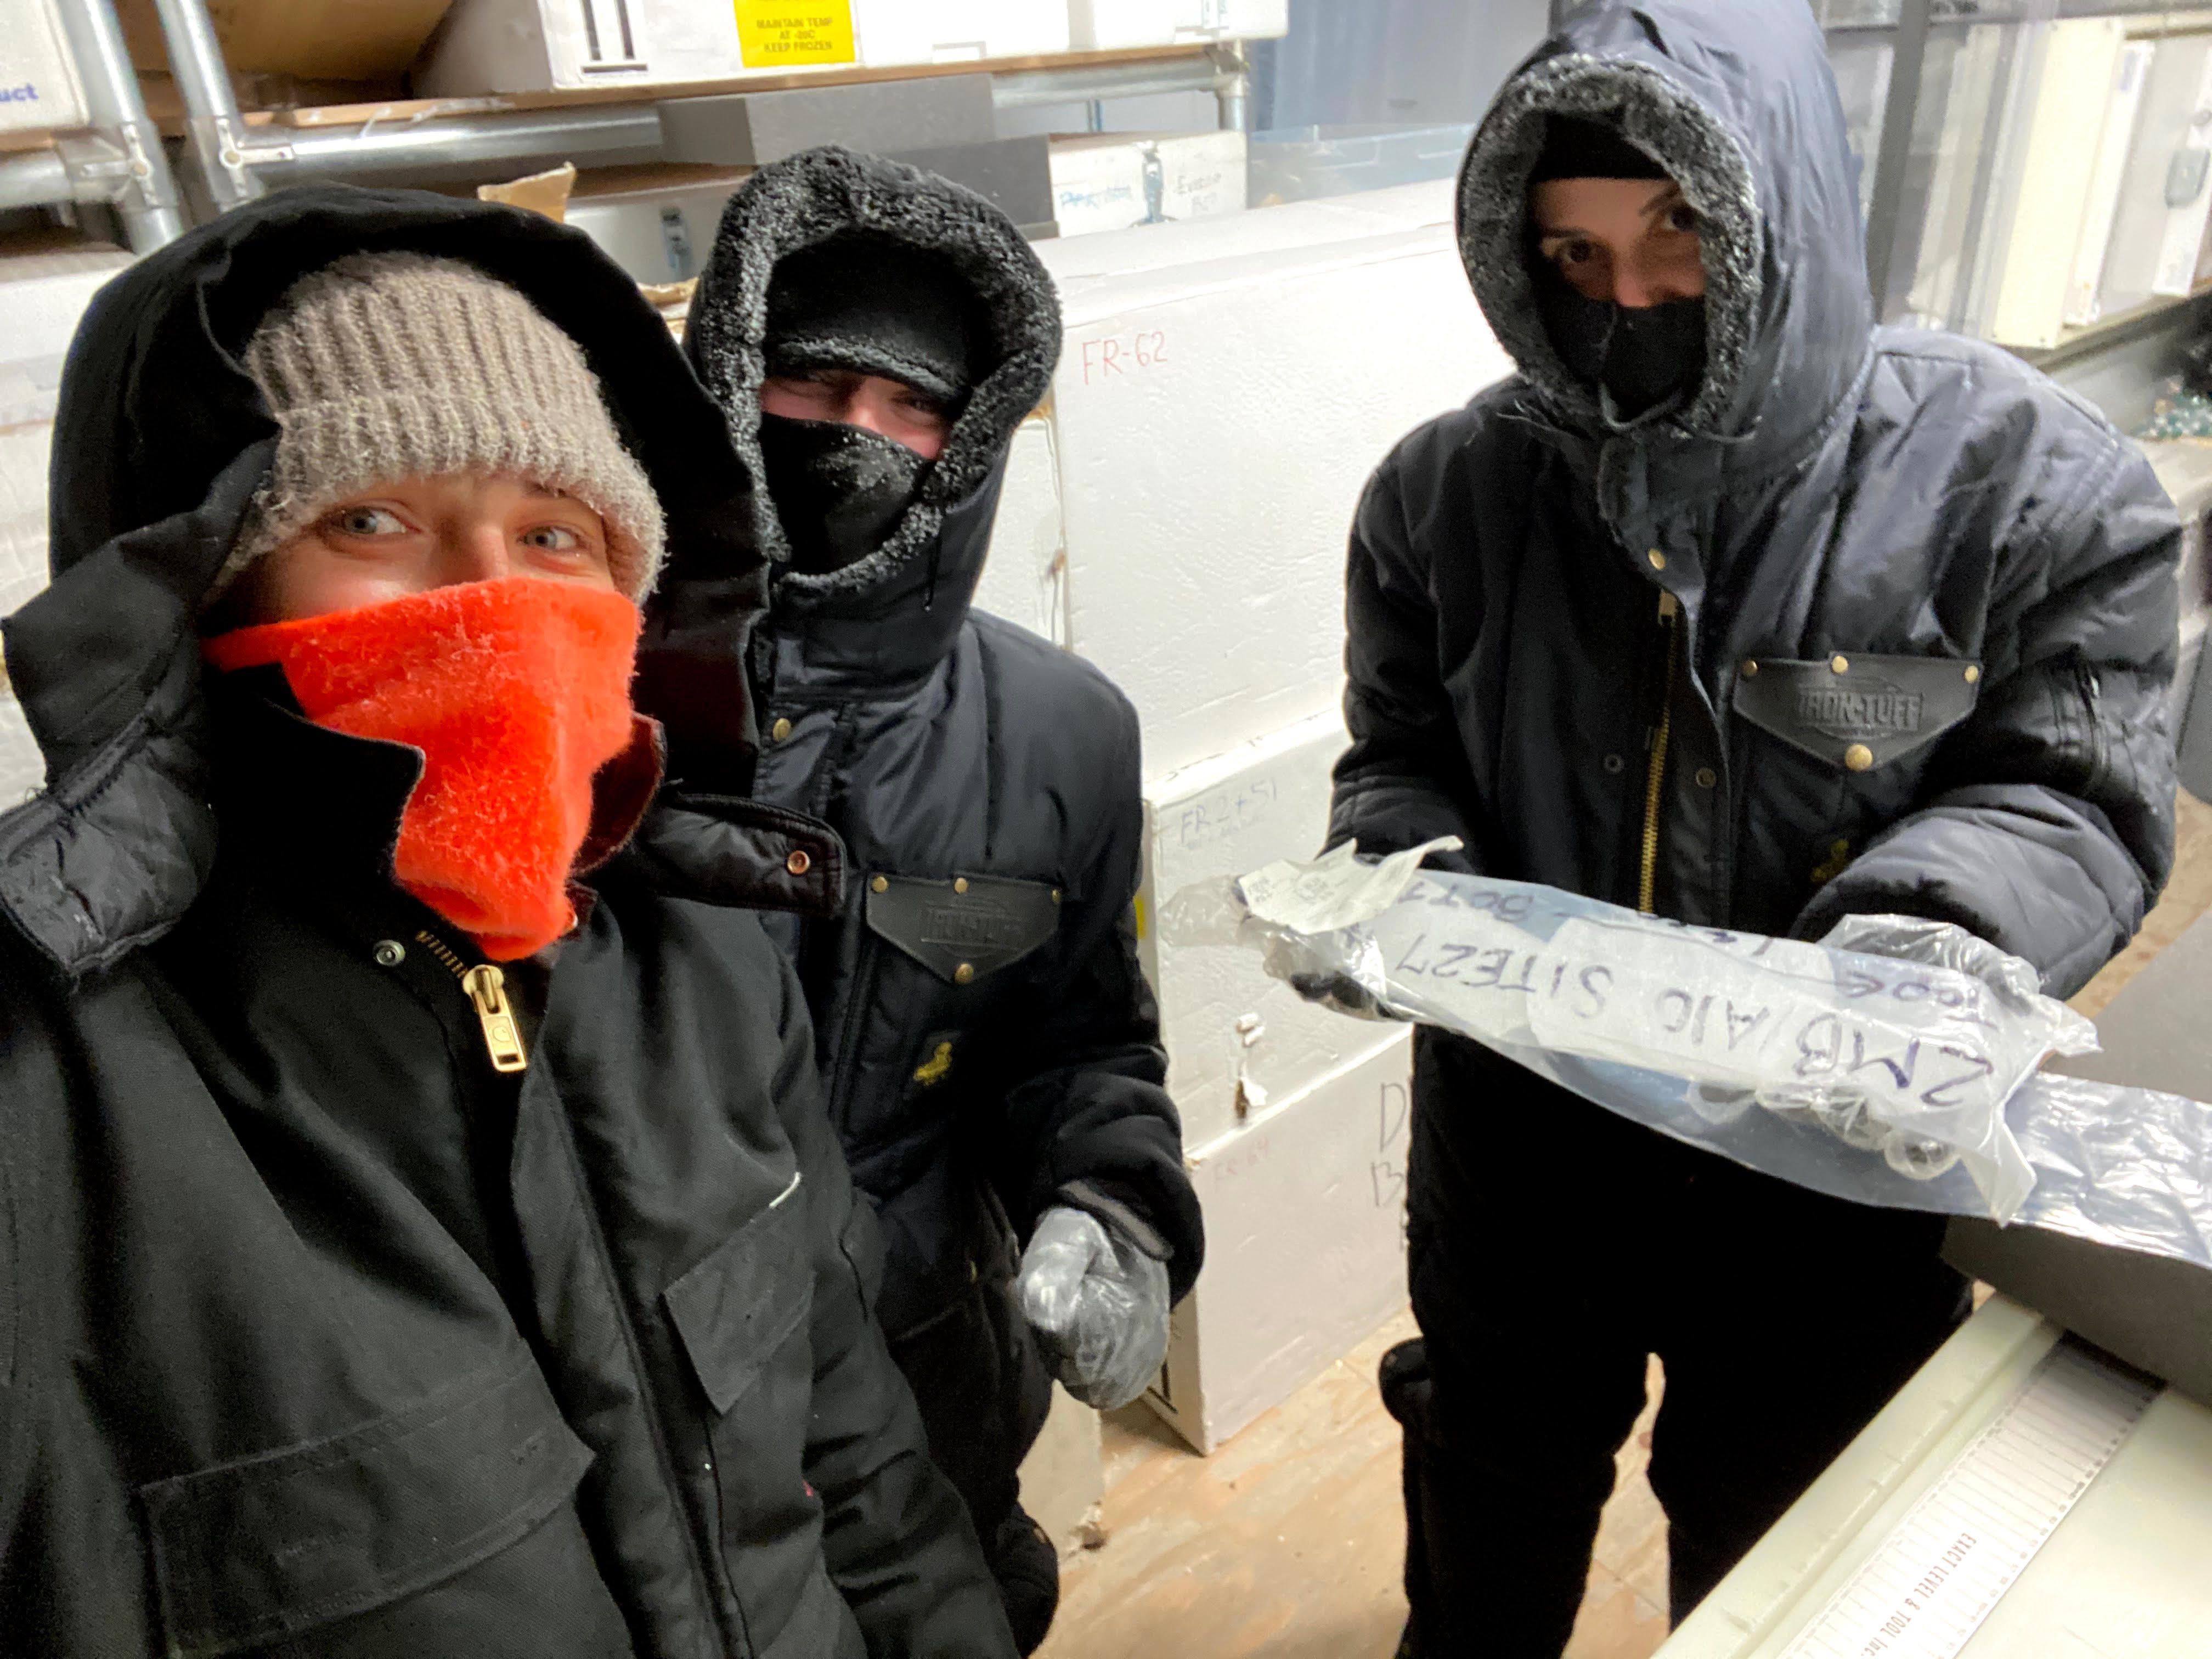 UMaine graduate students Lela Gadrani, Hanna Brooks, and Meredith Helmick work on ice cores in the freezer